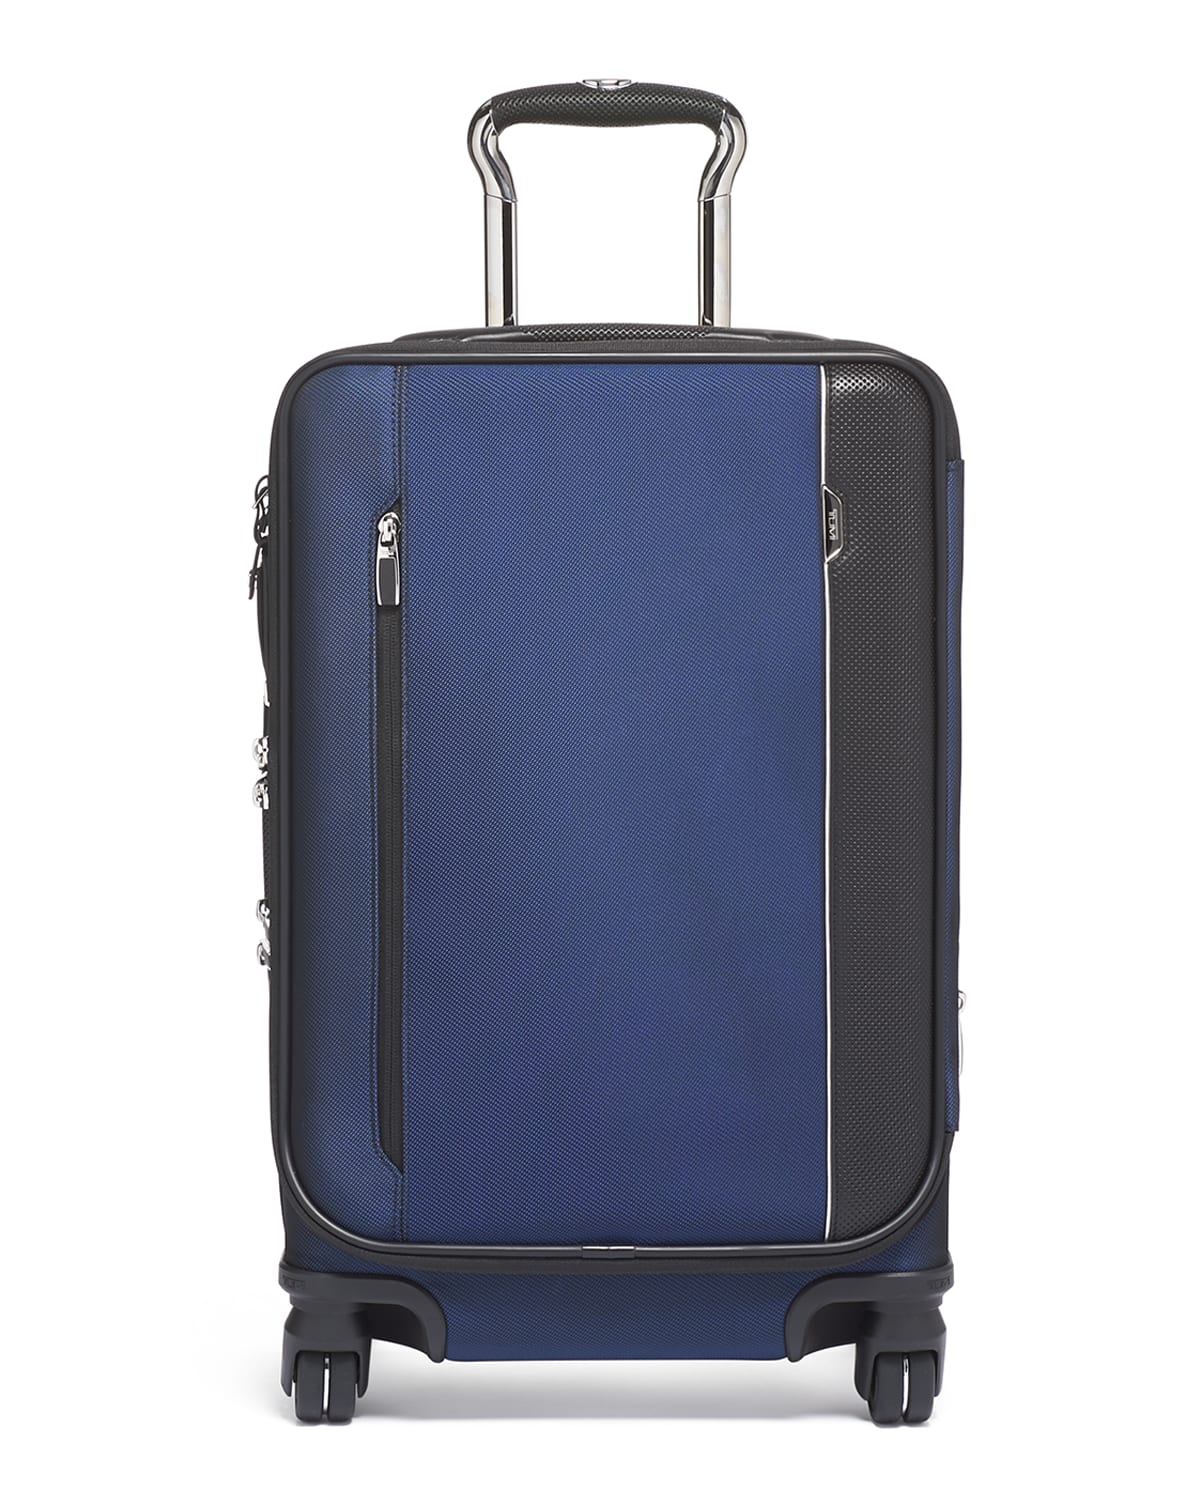 Tumi Arrive International Dual Access 4 Wheel Carryon Luggage